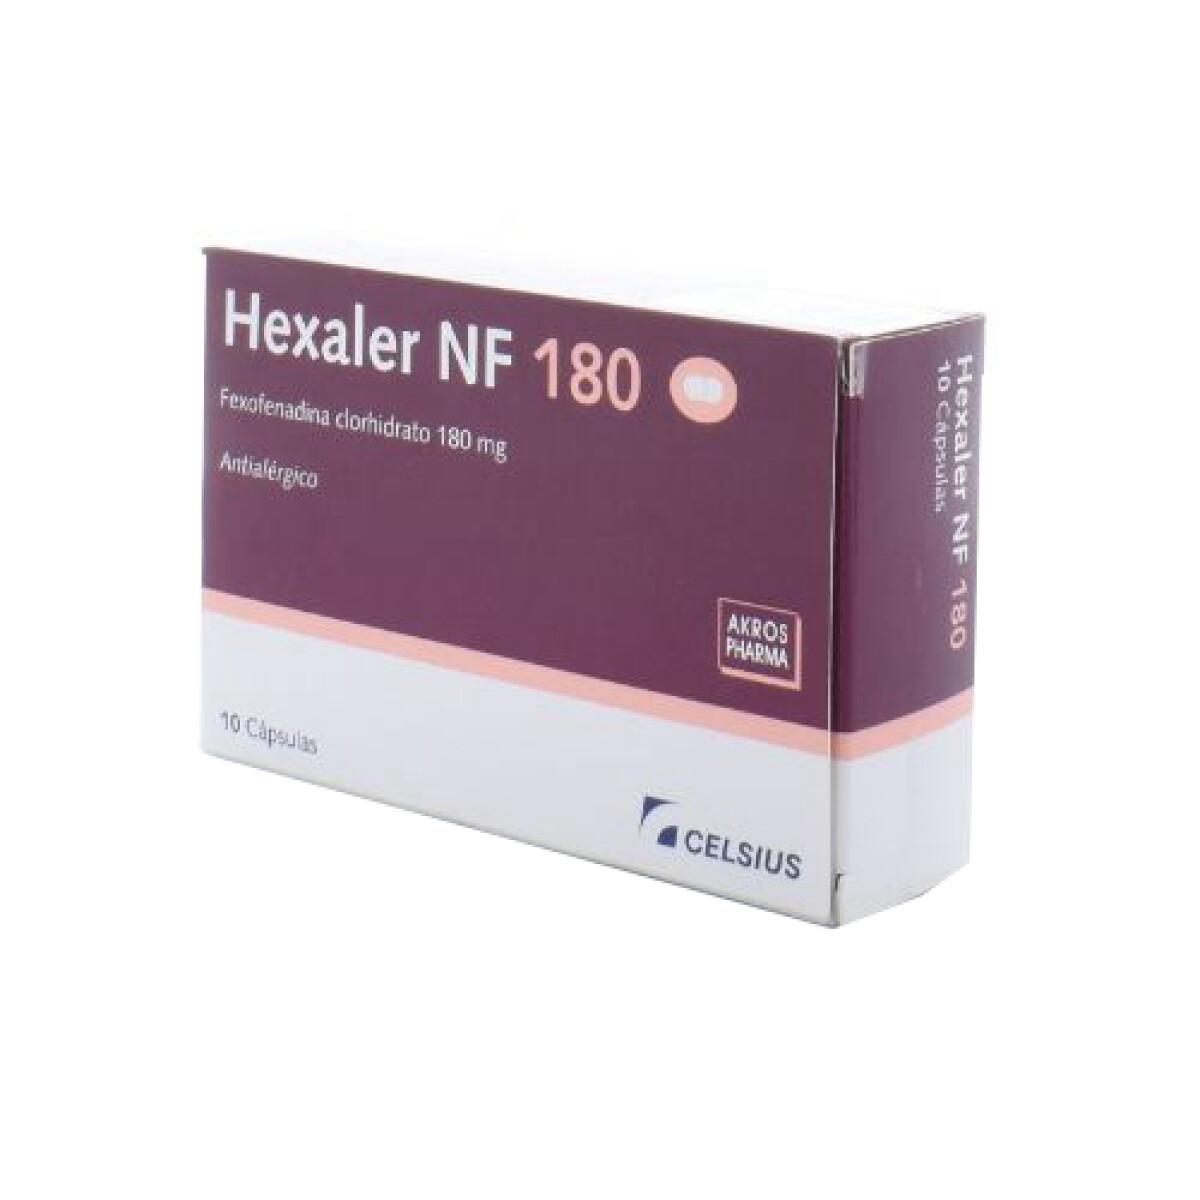 Hexaler NF 180 mg 10 comprimidos 